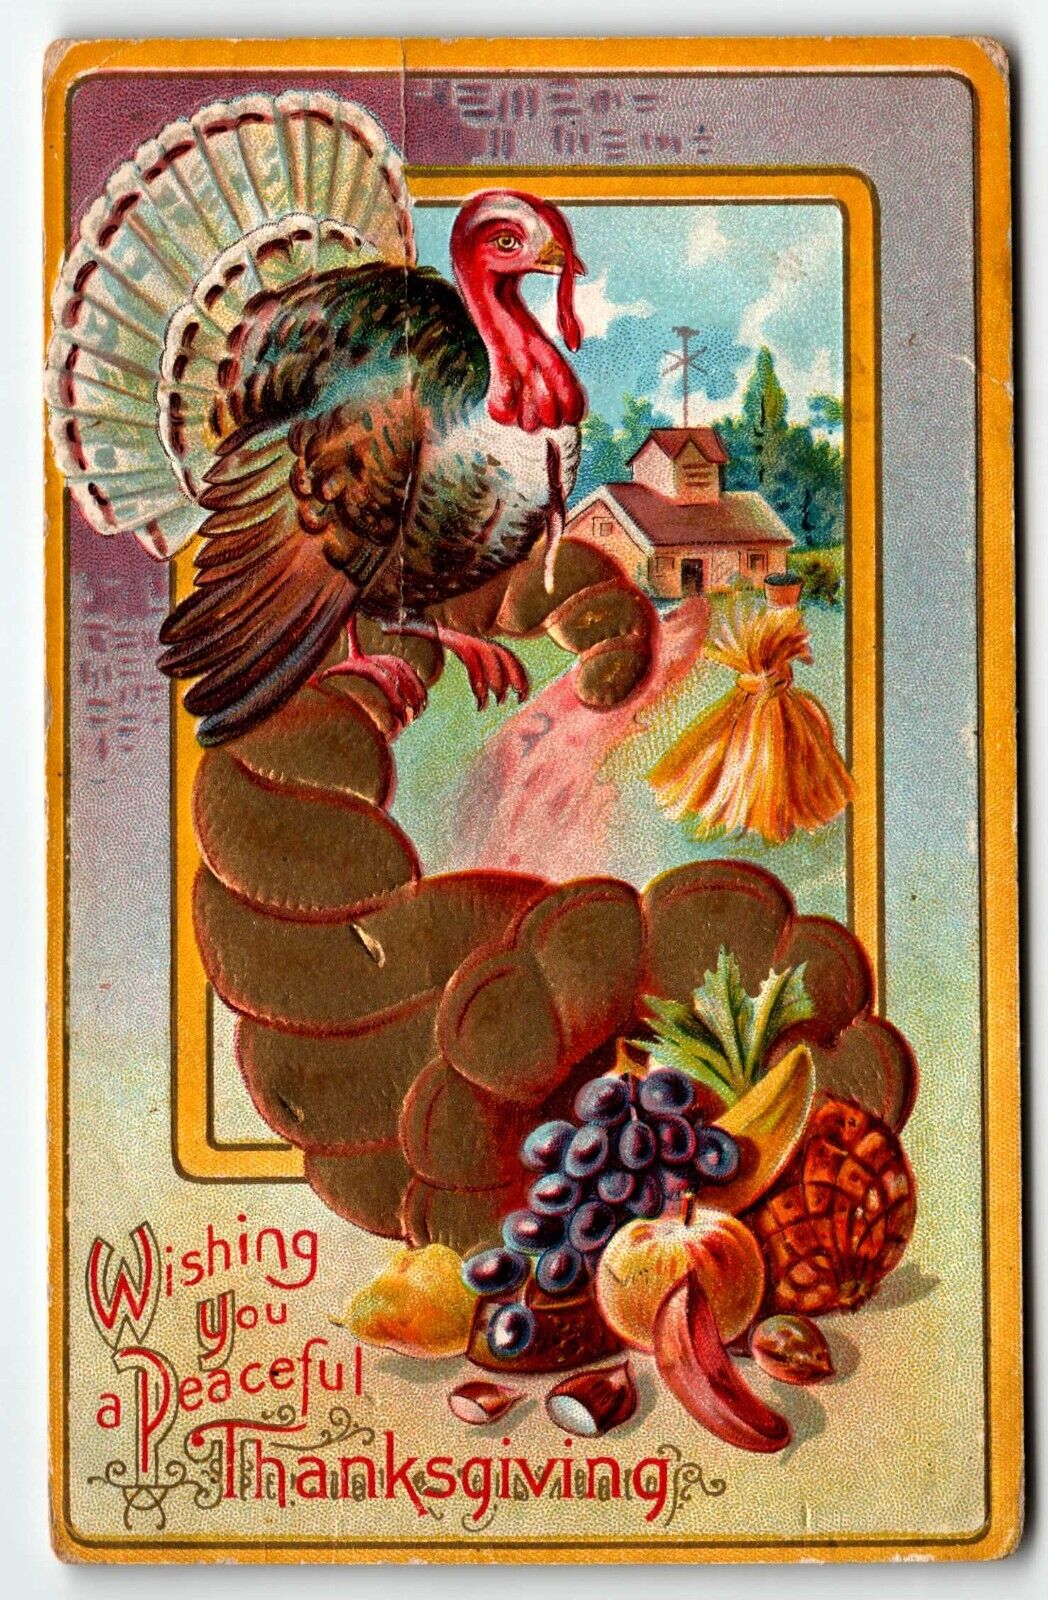 Wishing You a Peaceful Thanksgiving Postcard Turkey Cornucopia 1910